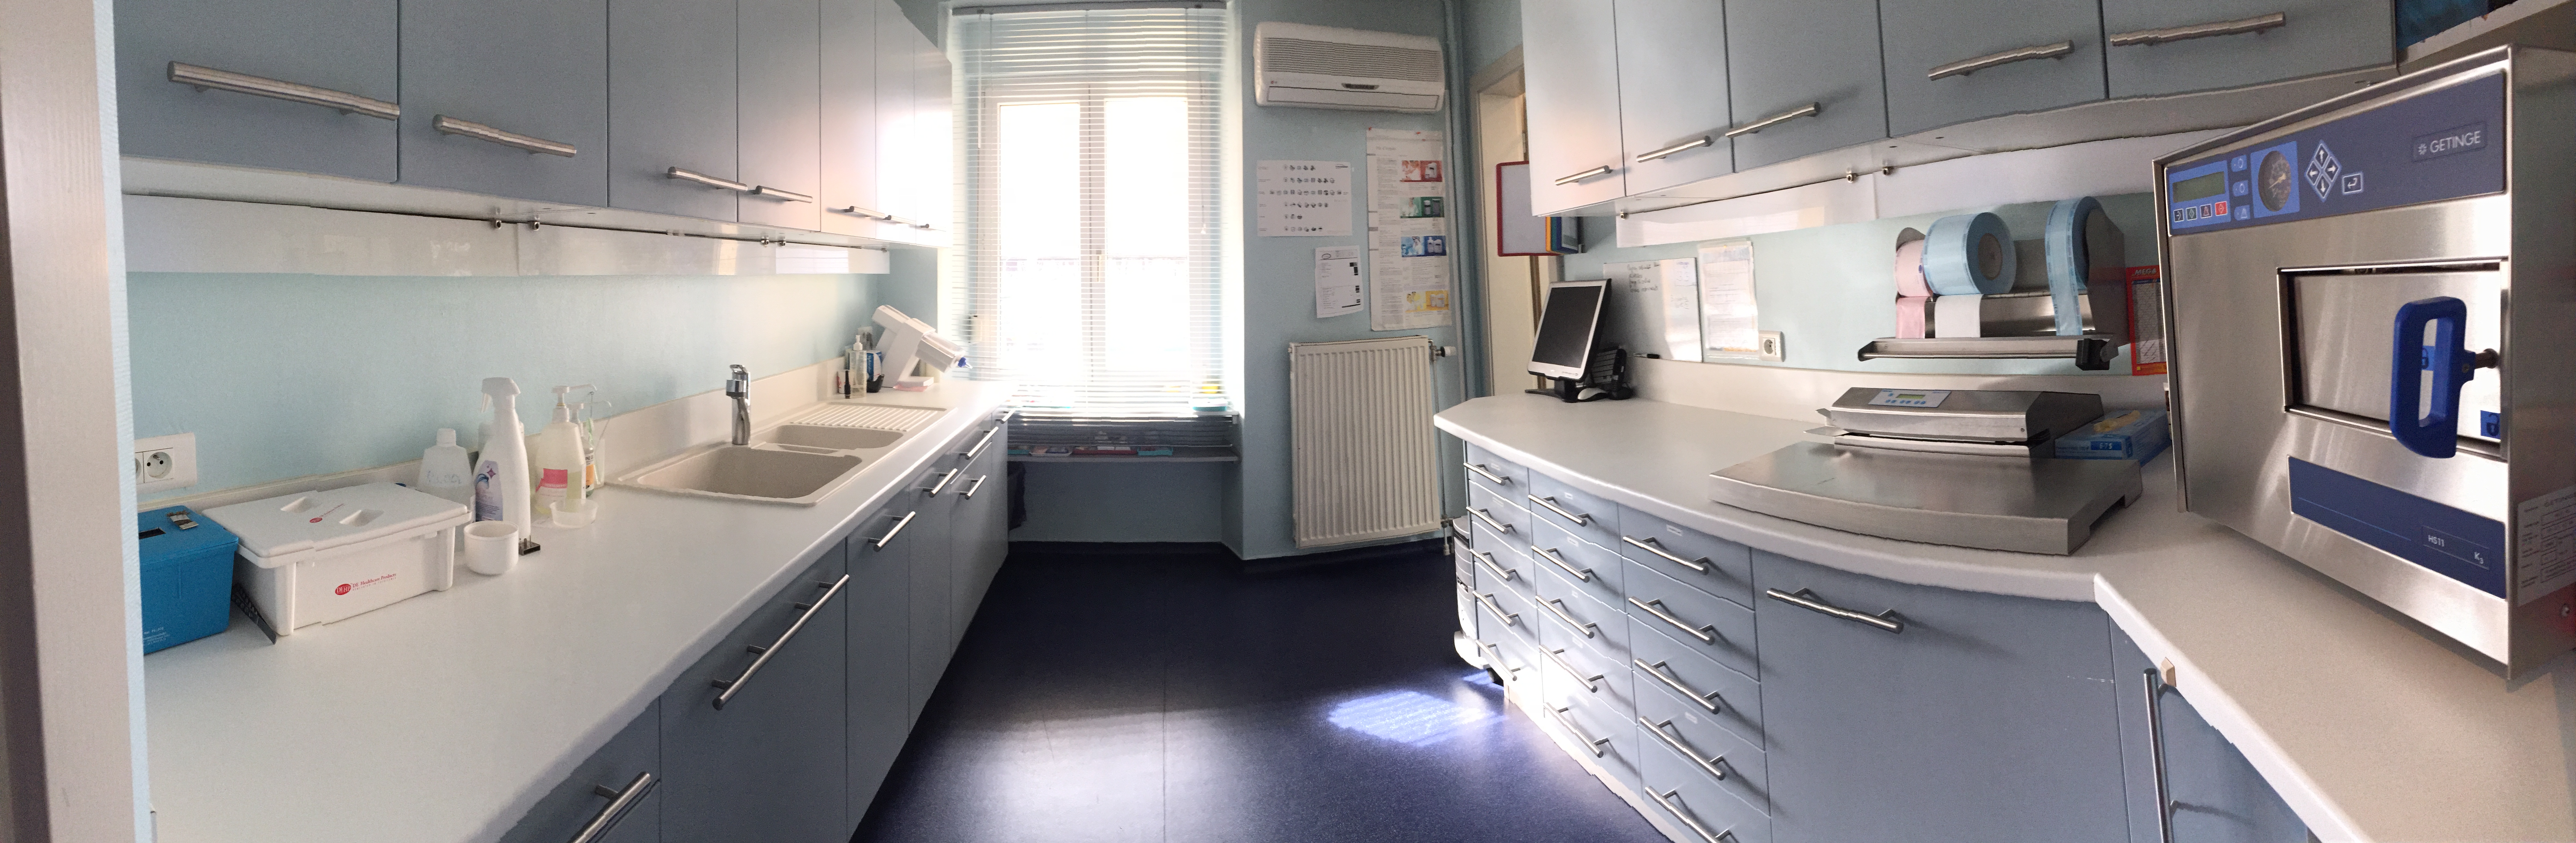 salle stérilisation